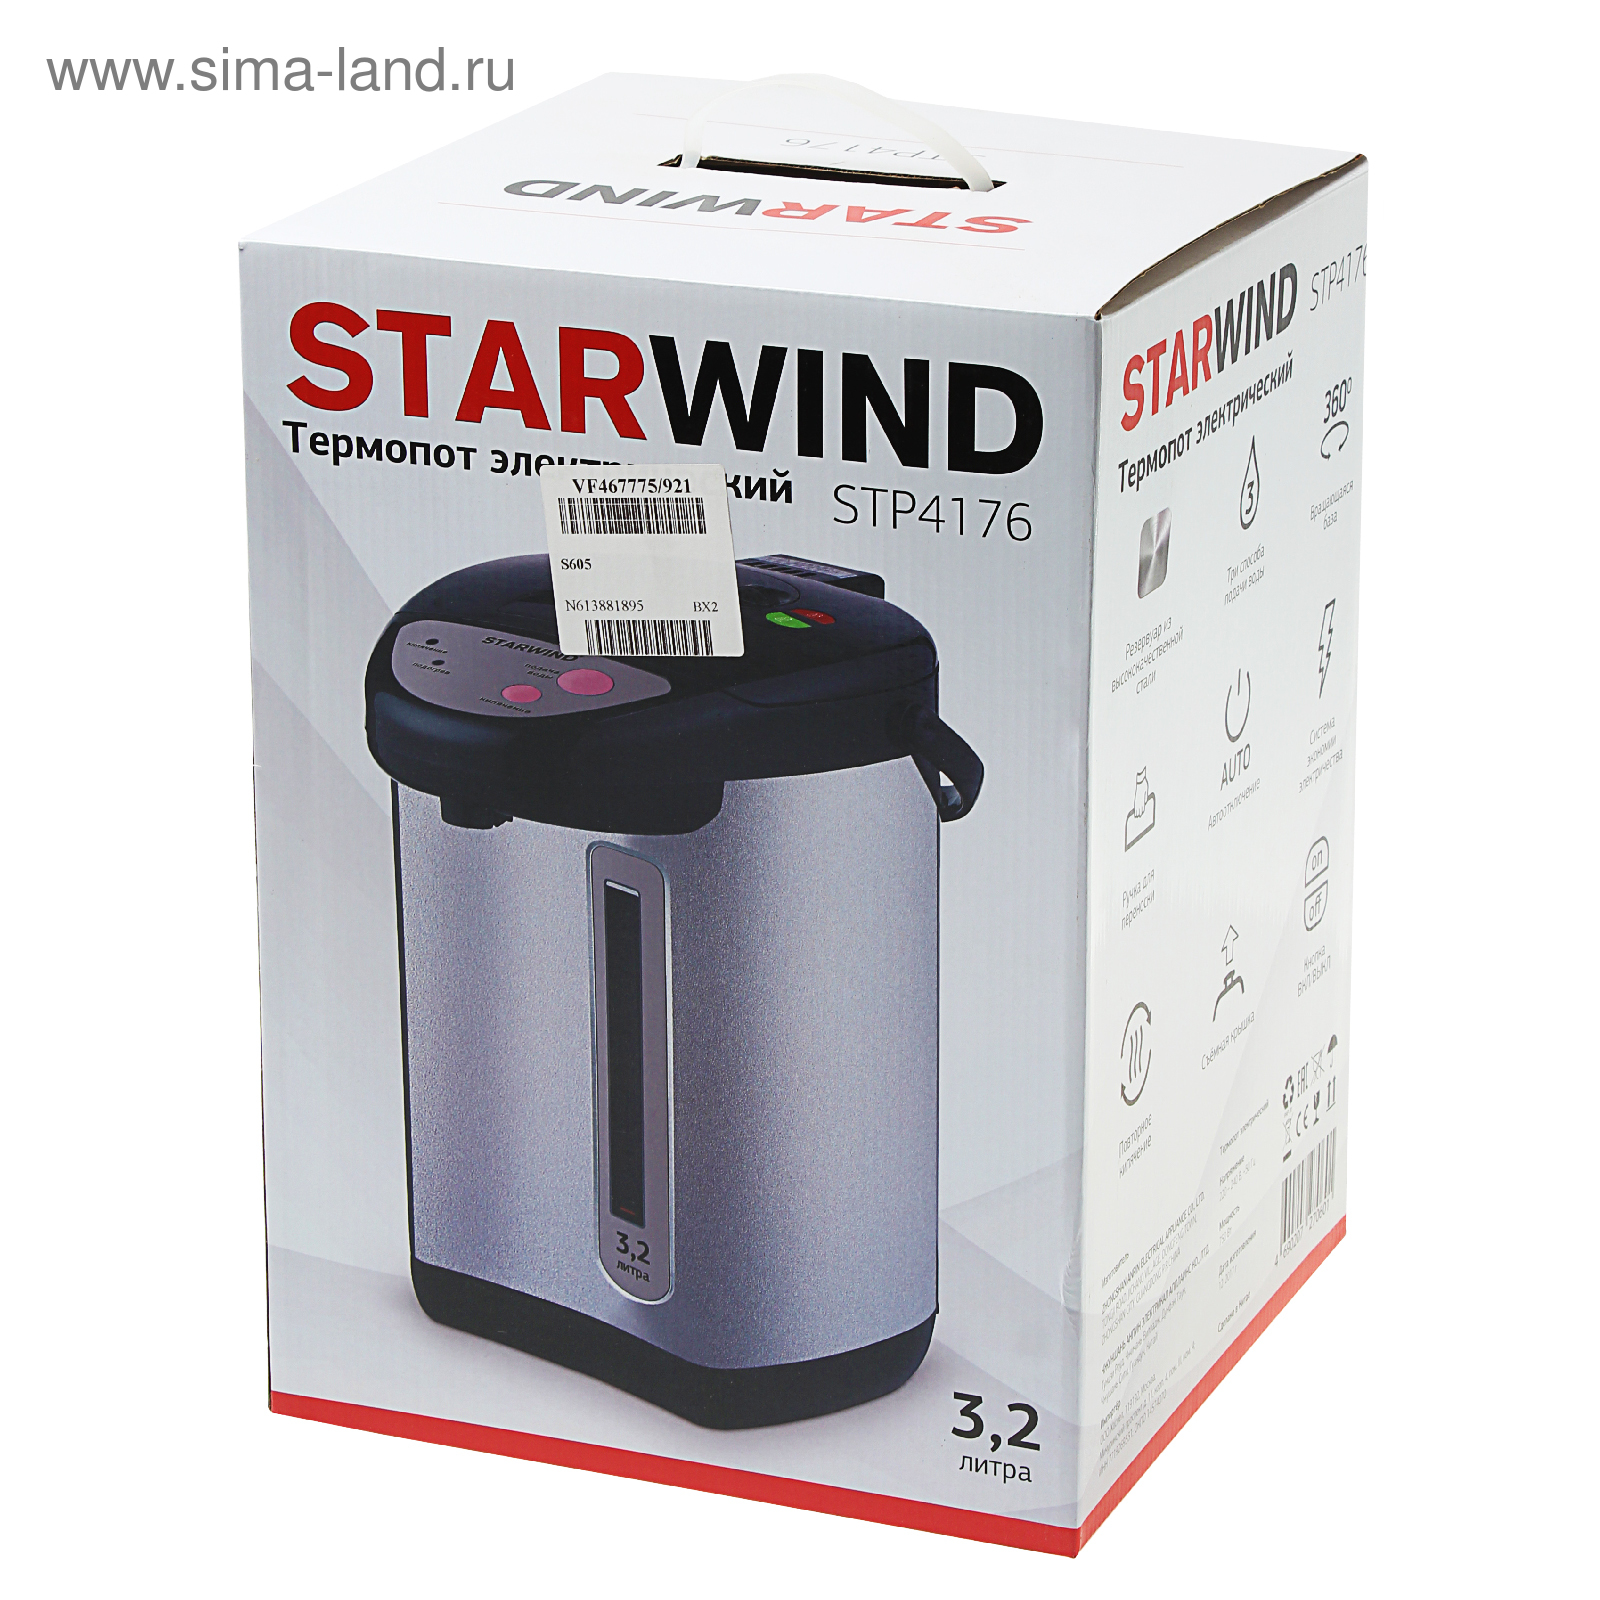 Starwind stdt401. Термопот STARWIND (stp4176). Термопот STARWIND 3.2 Л STP 4176. Термопот STARWIND 3.2 Л. STARWIND термопот 3.7.